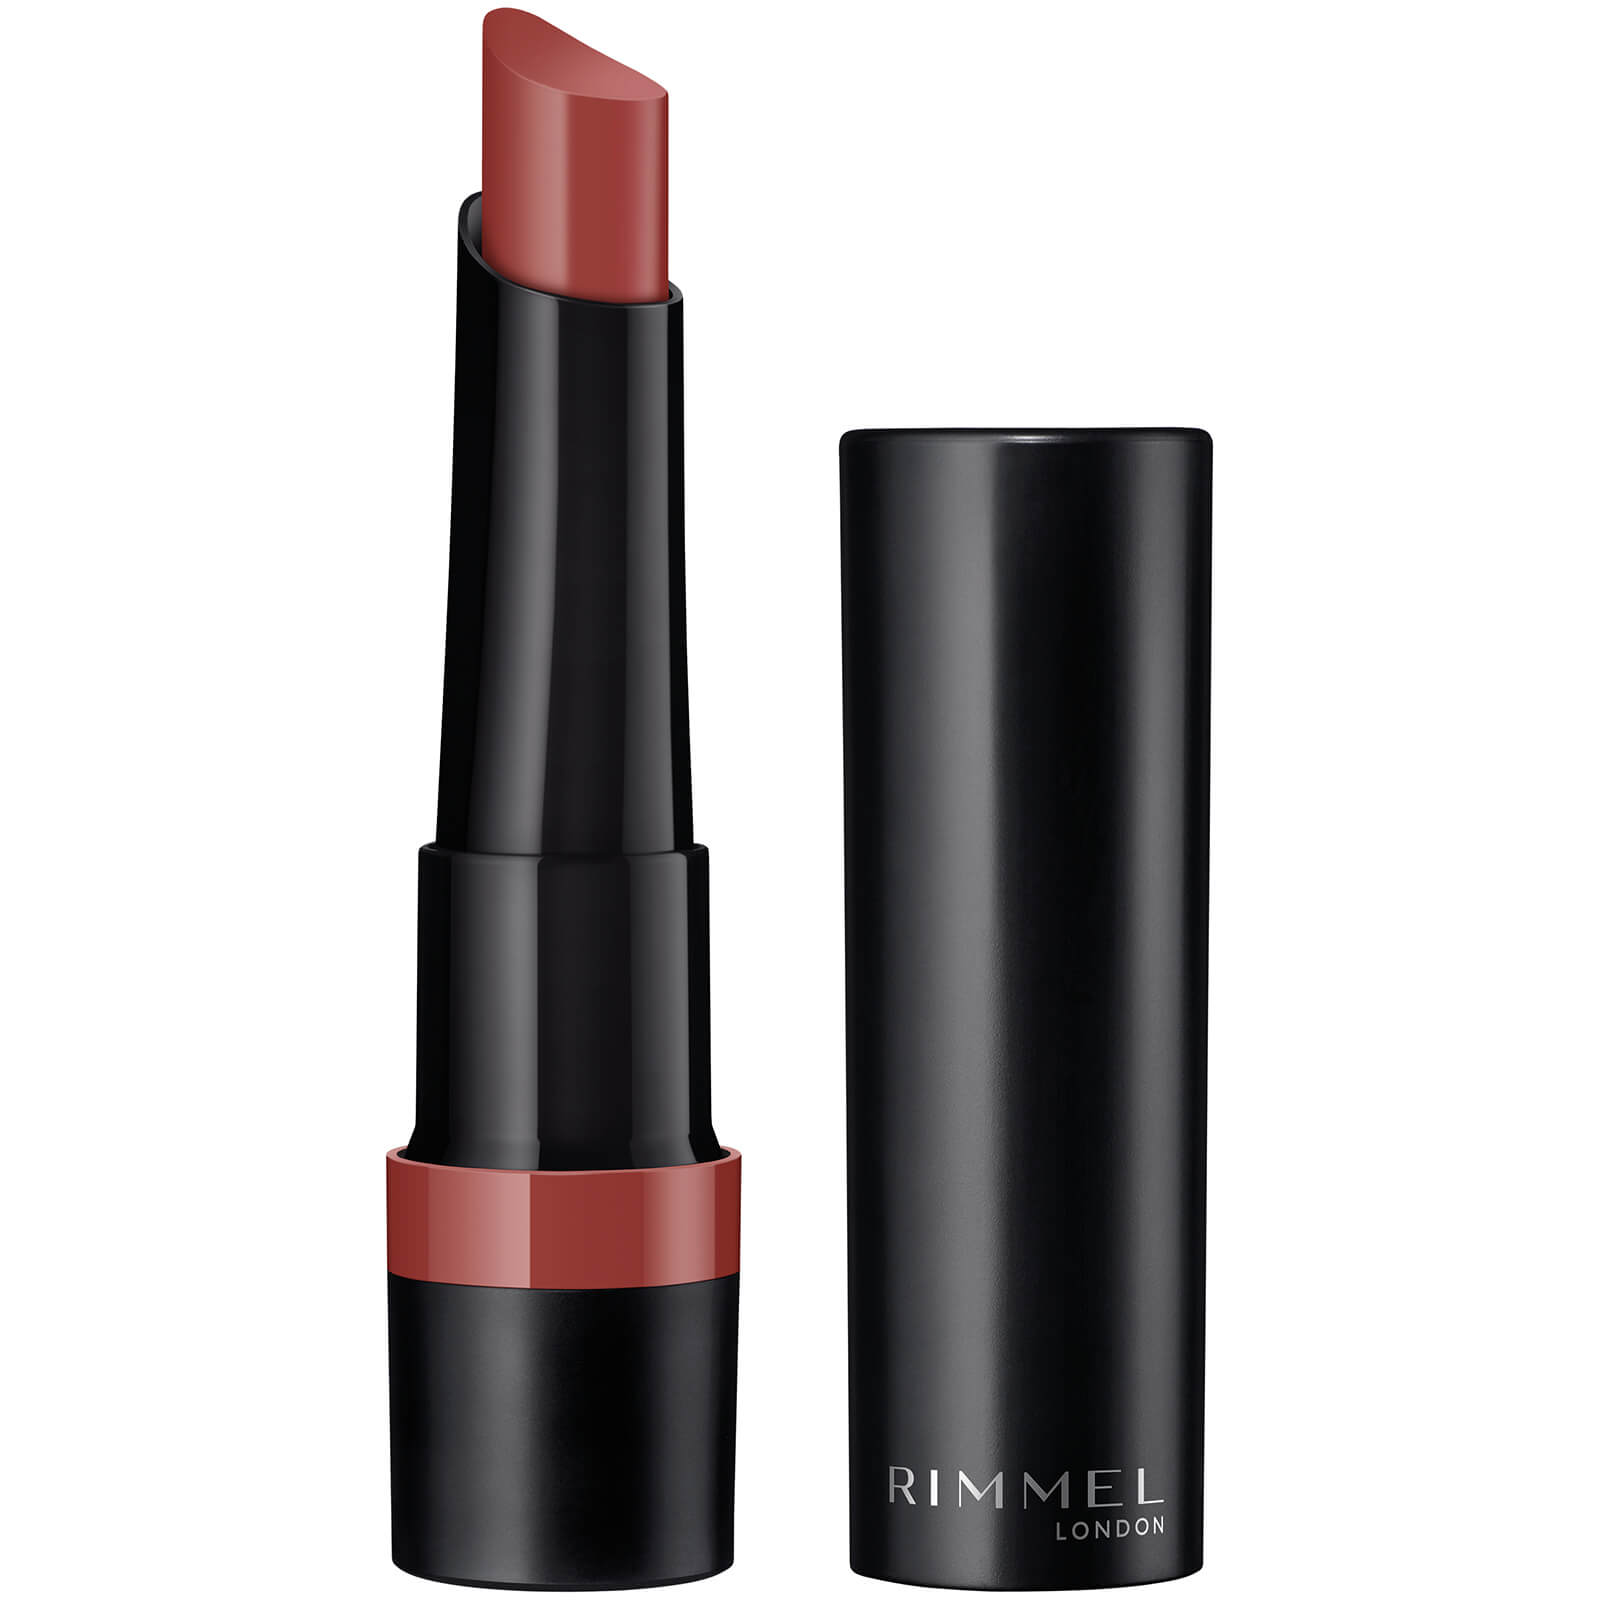 Rimmel Lasting Finish Matte Lipstick - 180 - Blushed Pink, 2.3g